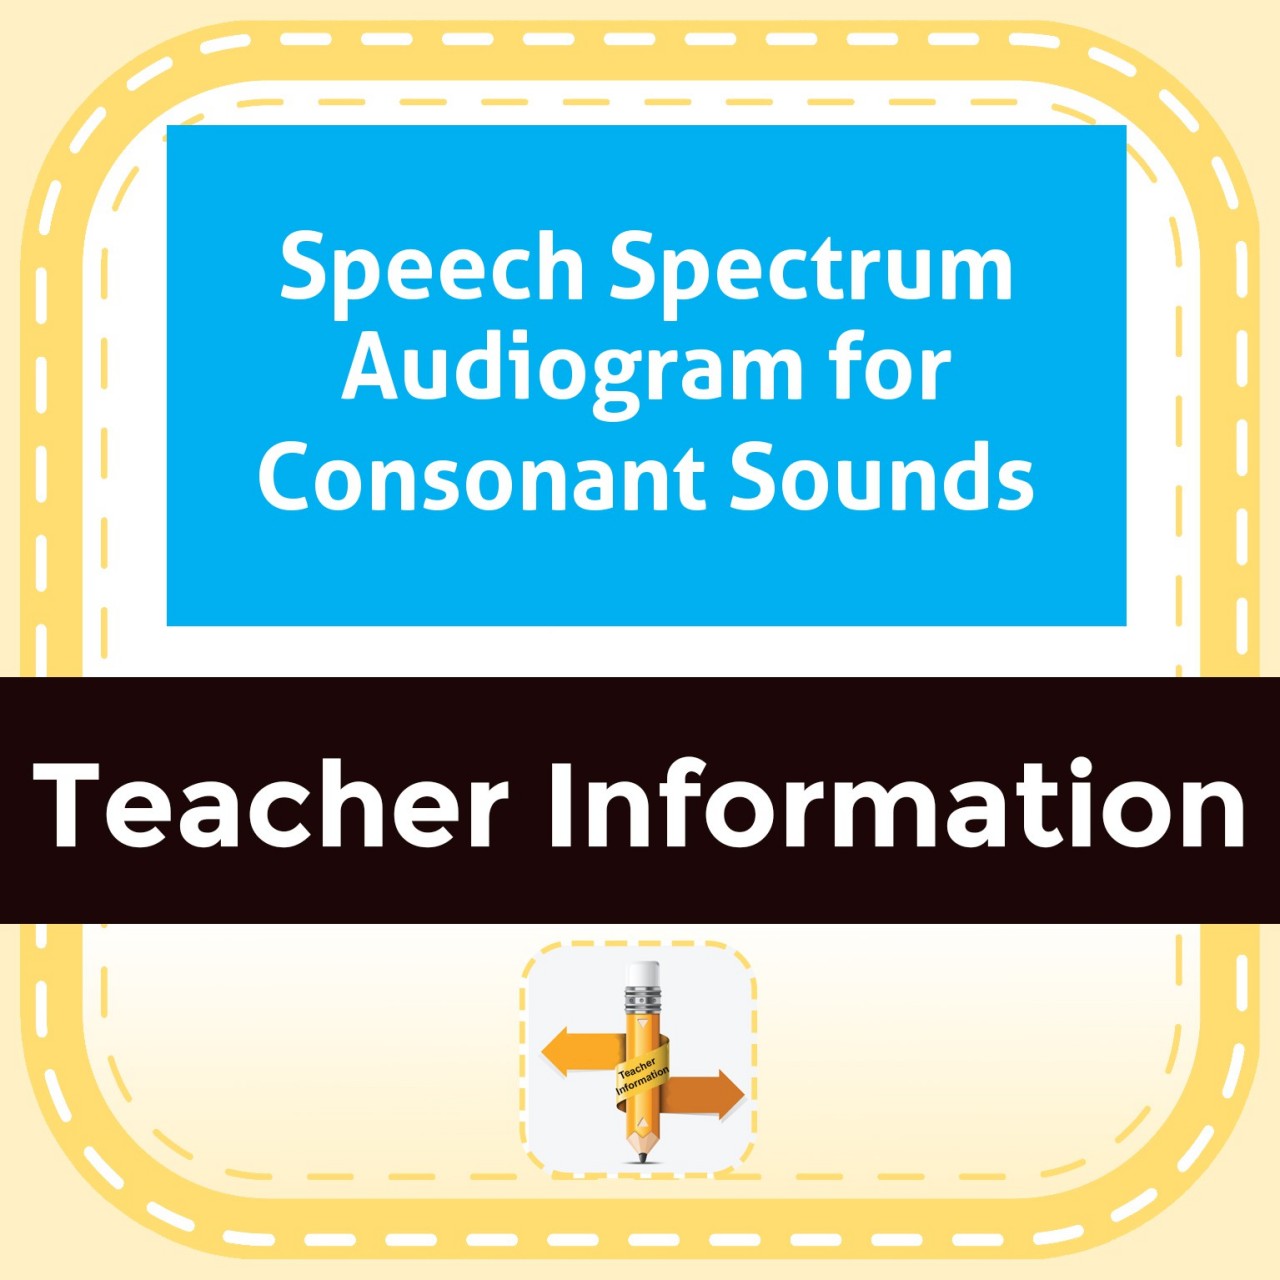 Speech Spectrum Audiogram for Consonant Sounds